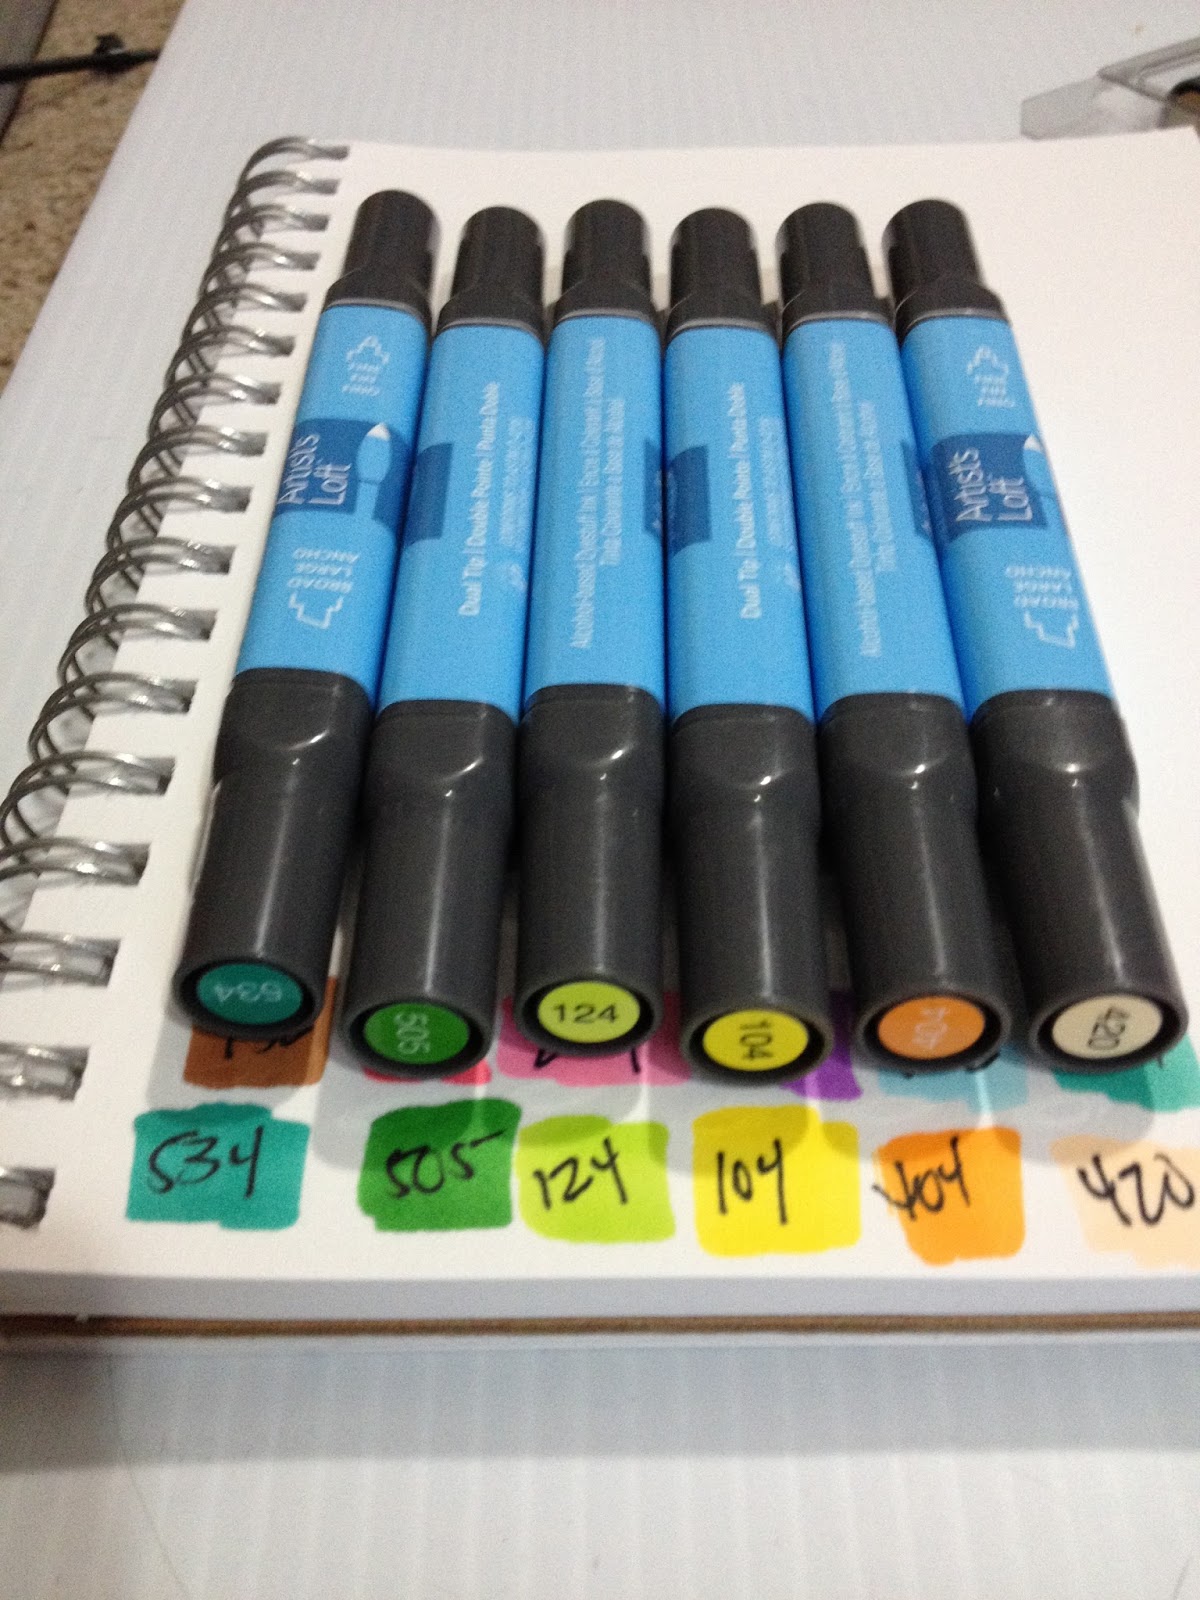 12 Spectrum Noir Markers Pastels Alcohol Markers, Pens Pastel Set  Illustration, Drawing, Blending, Shading, Rendering, Arts, Craft 